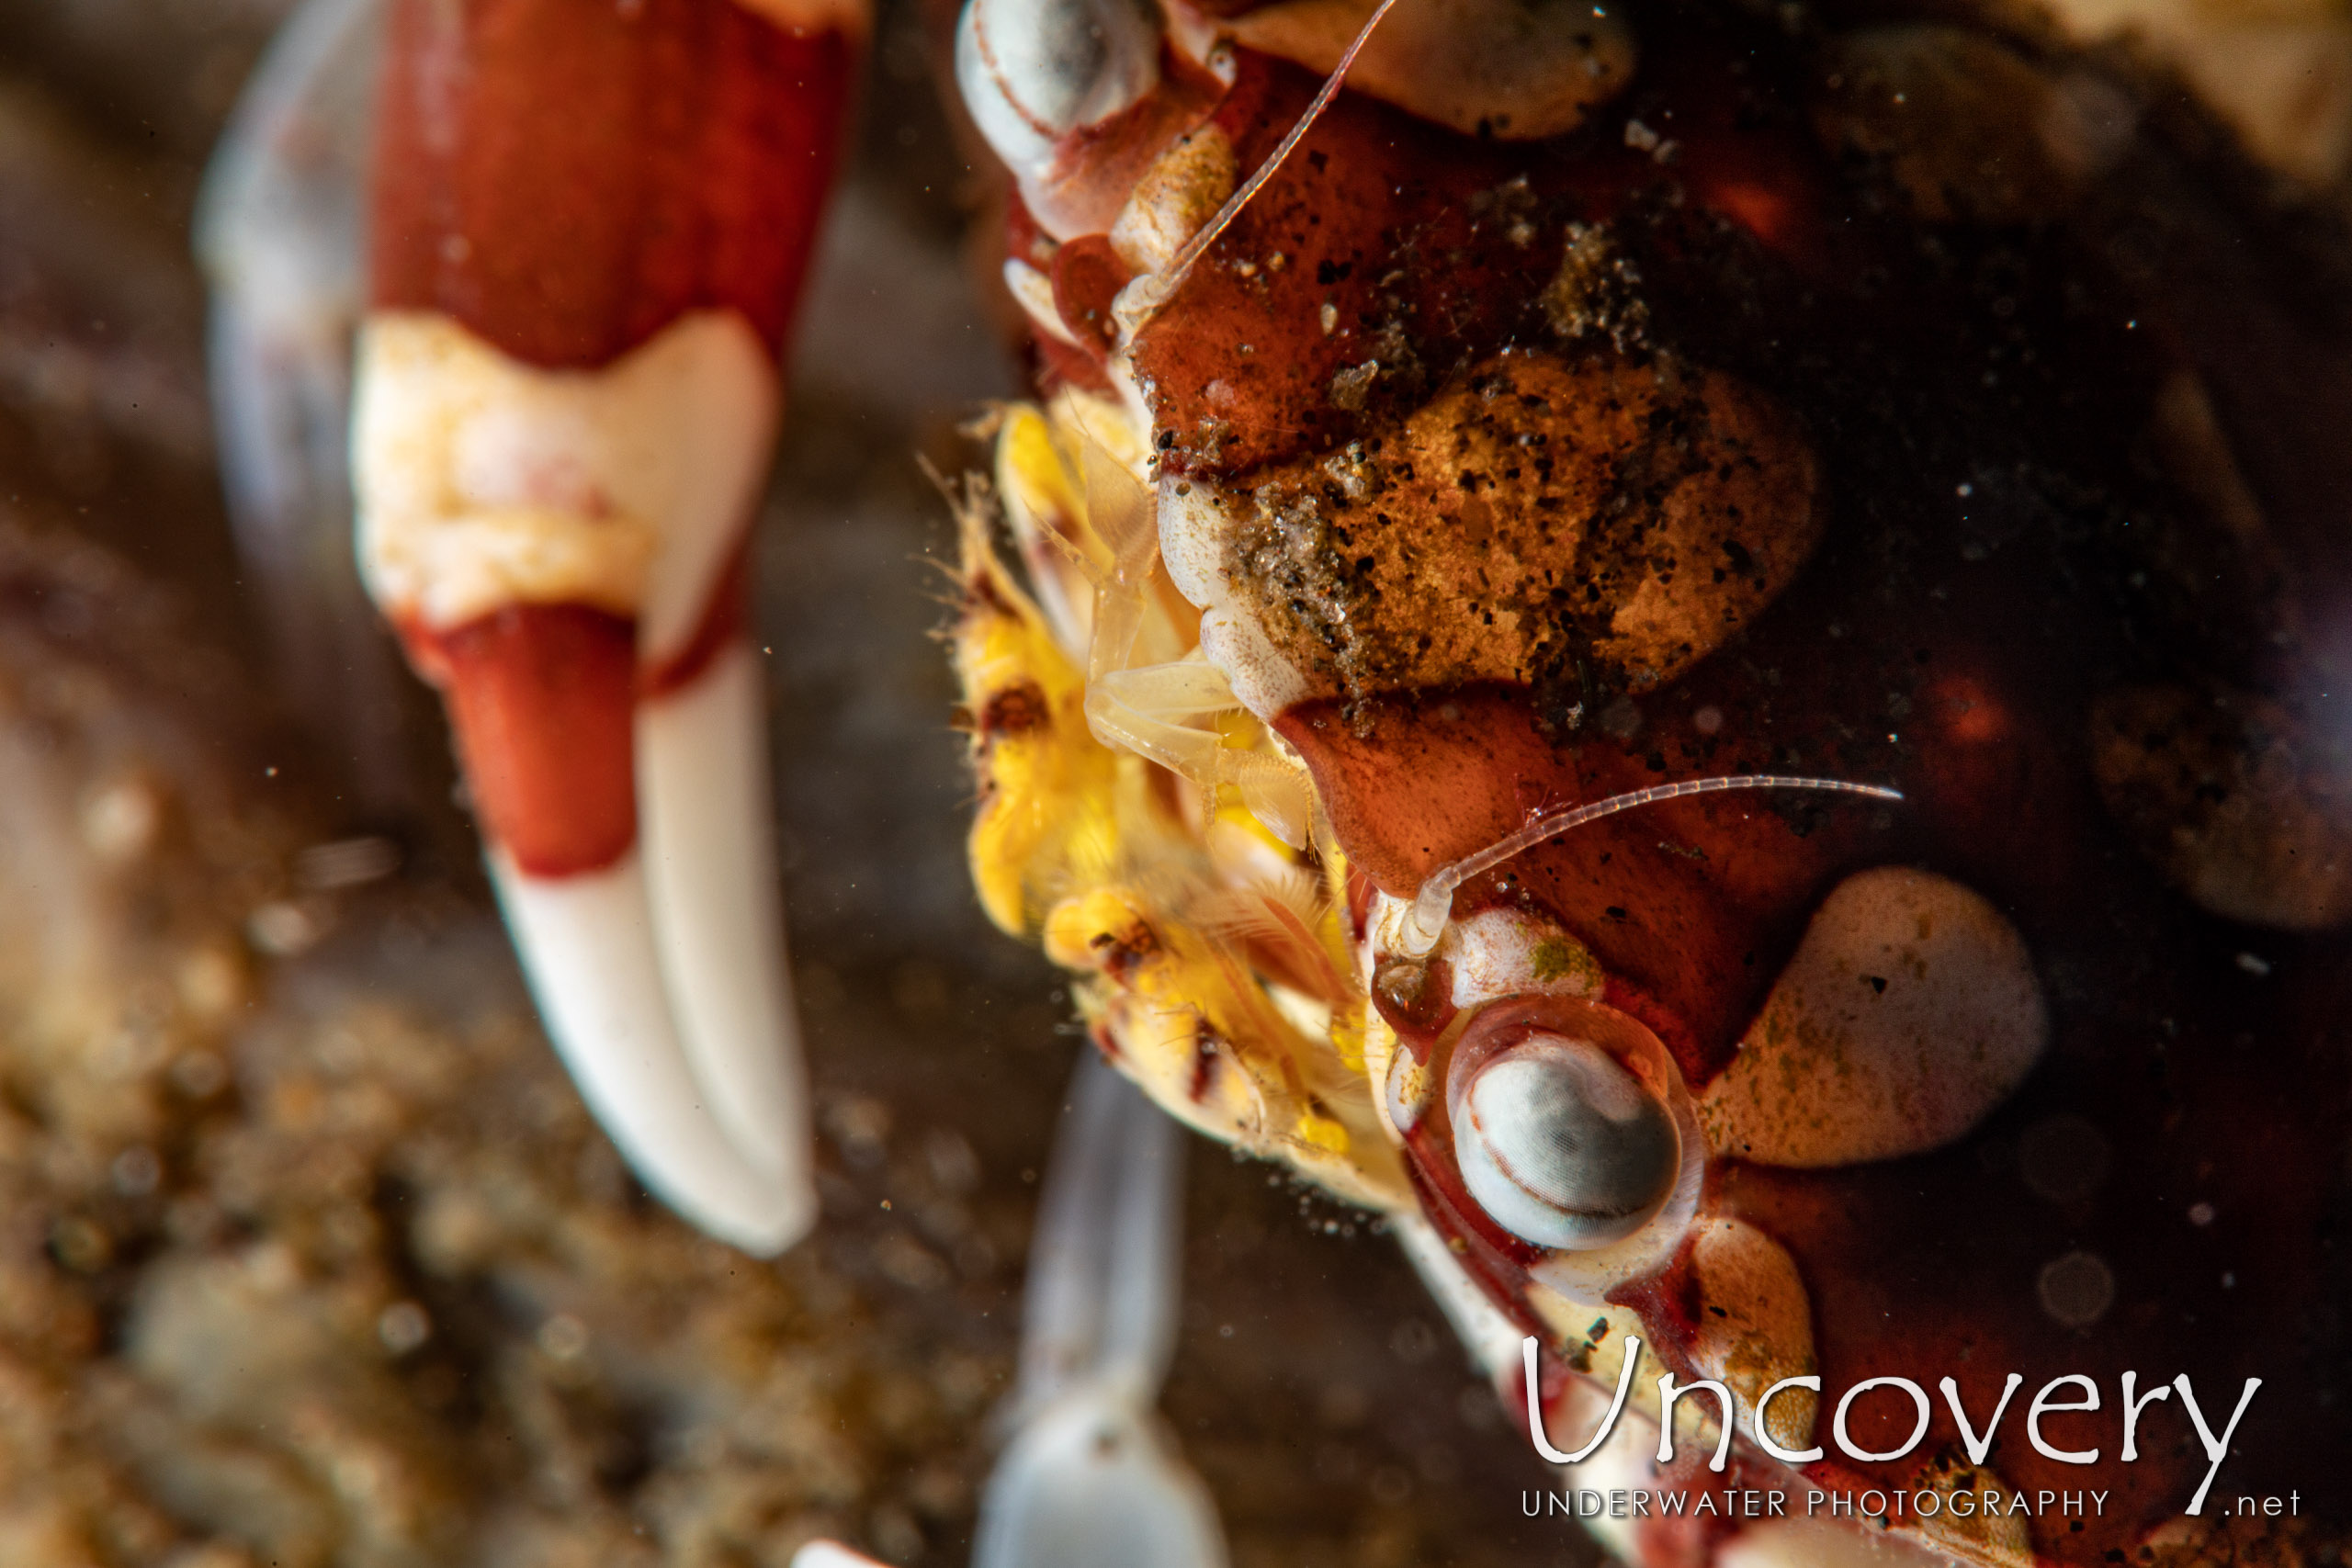 Harlequin Swimmer Crab (lissocarcinus Laevis), photo taken in Indonesia, Bali, Tulamben, Batu Belah Slope